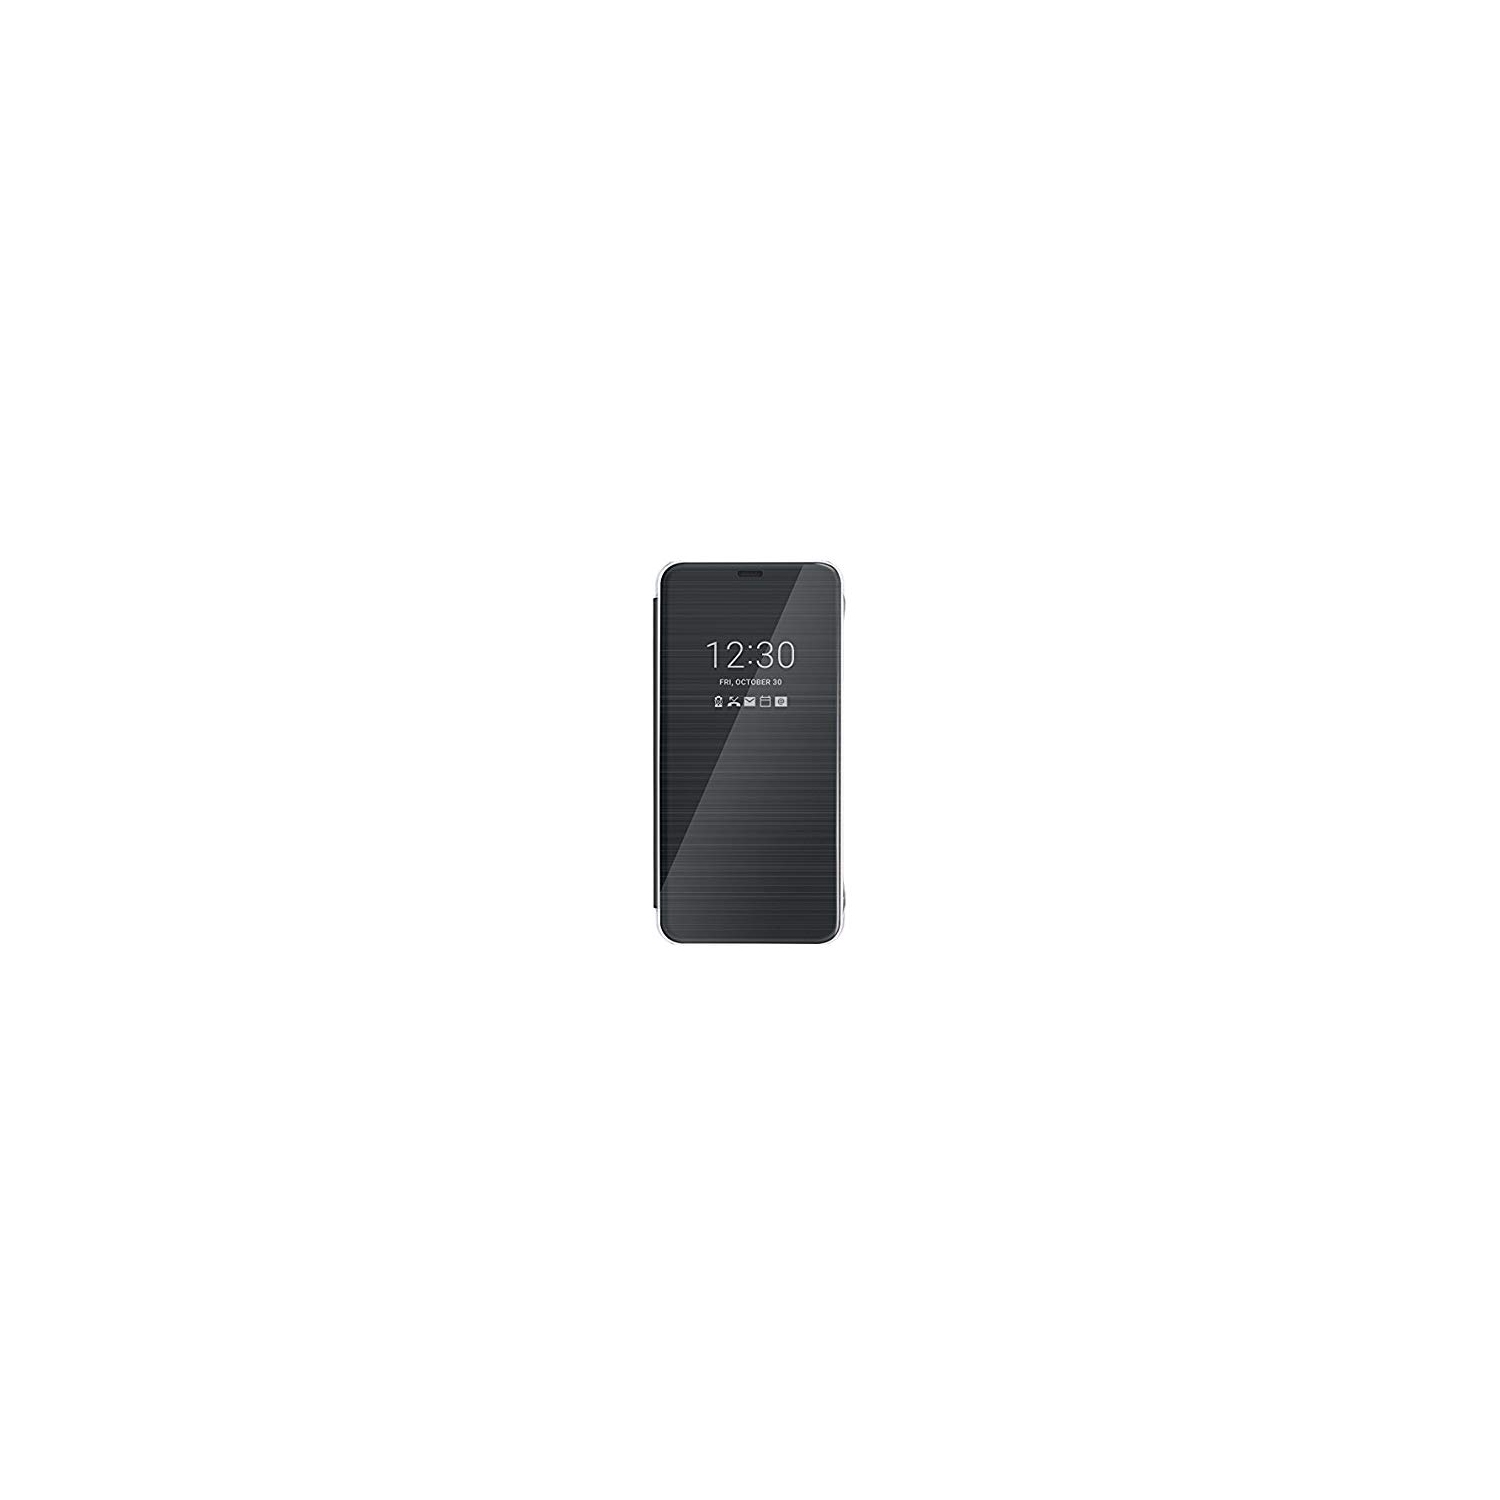 LG CFV300ACCABK Case for G6 Black